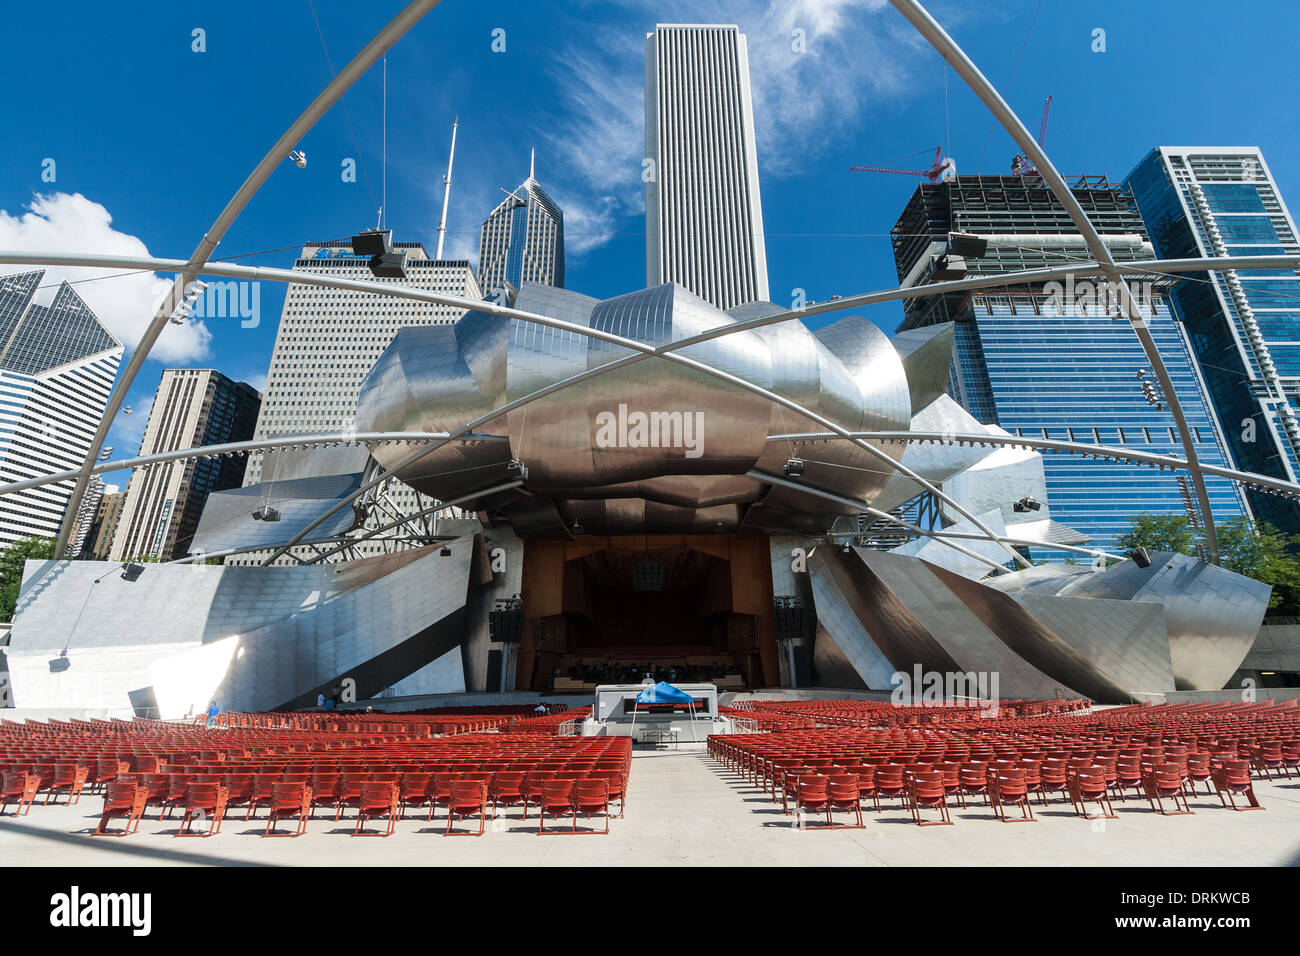 Chicago, Illinois Concert Arena Stock Photo